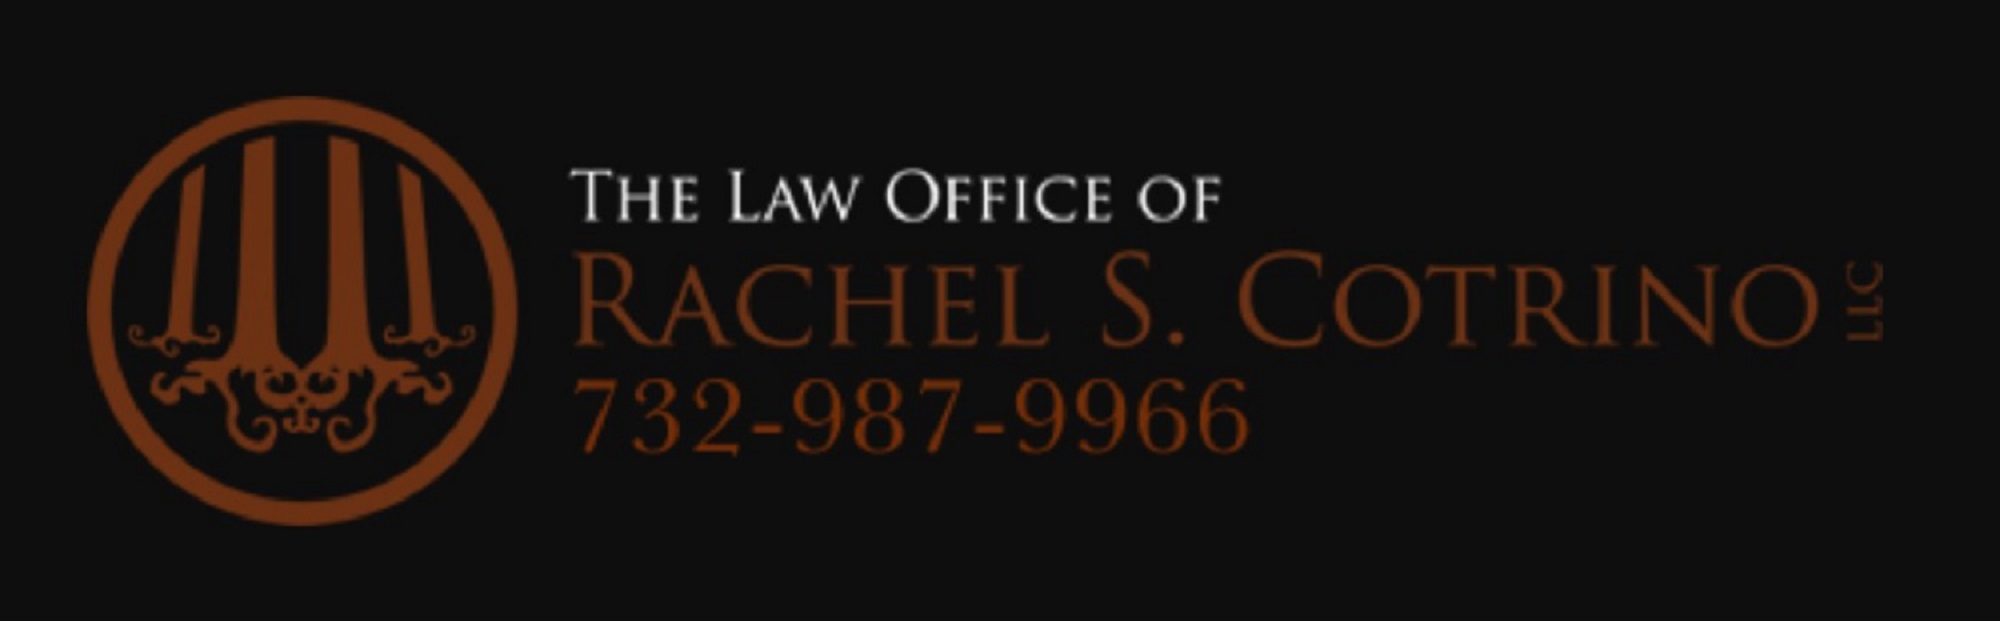 Law Office of Rachel S. Cotrino, LLC